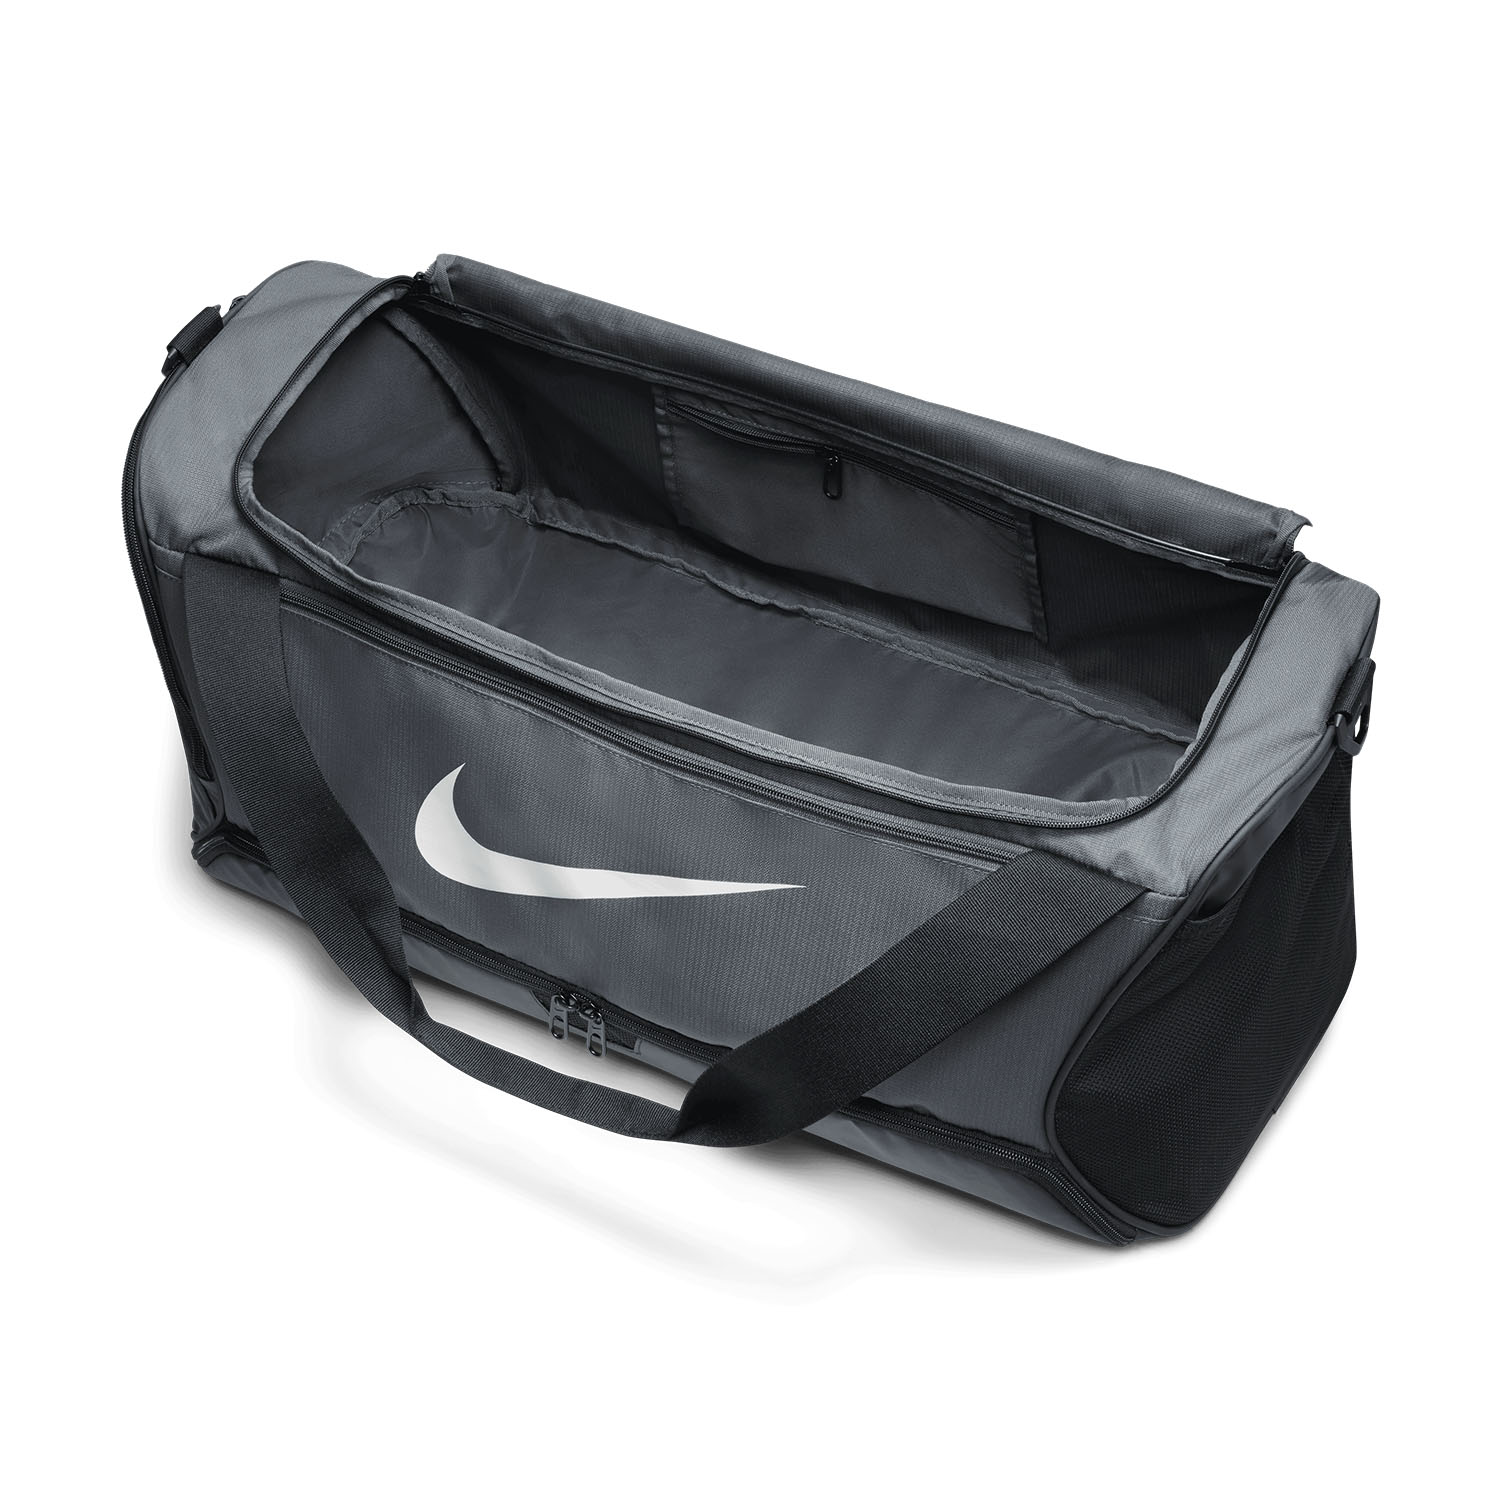 Nike Brasilia 9.5 Printed Backpack - Black 